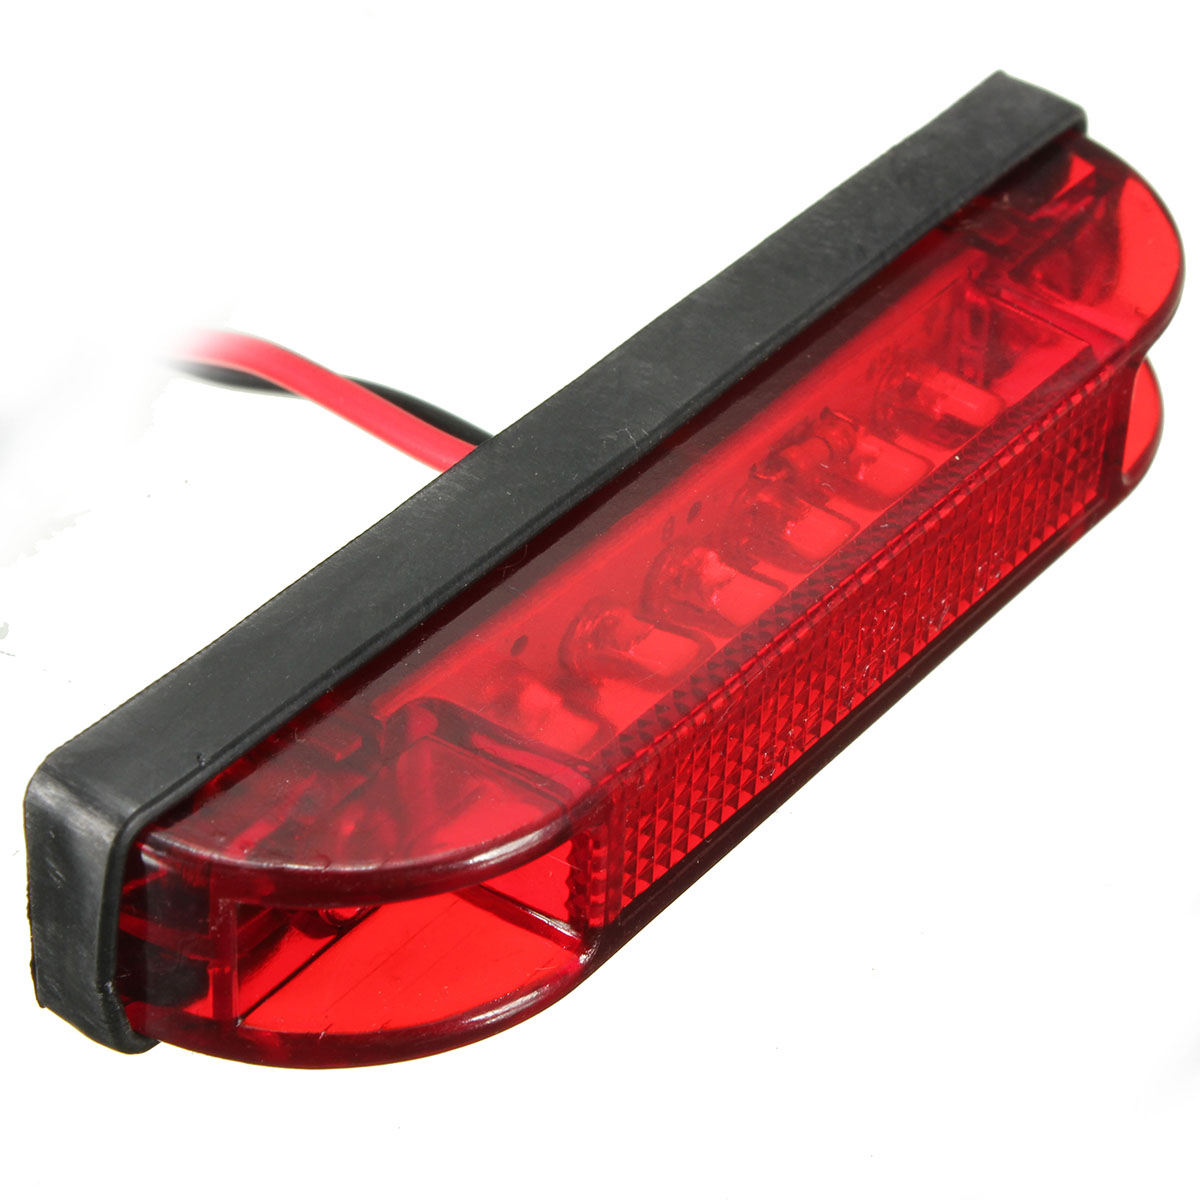 6-LED-Clearance-Side-Marker-Light-Indicator-Lamp-Truck-Trailer-Lorry-Van-12V-24V-1041426